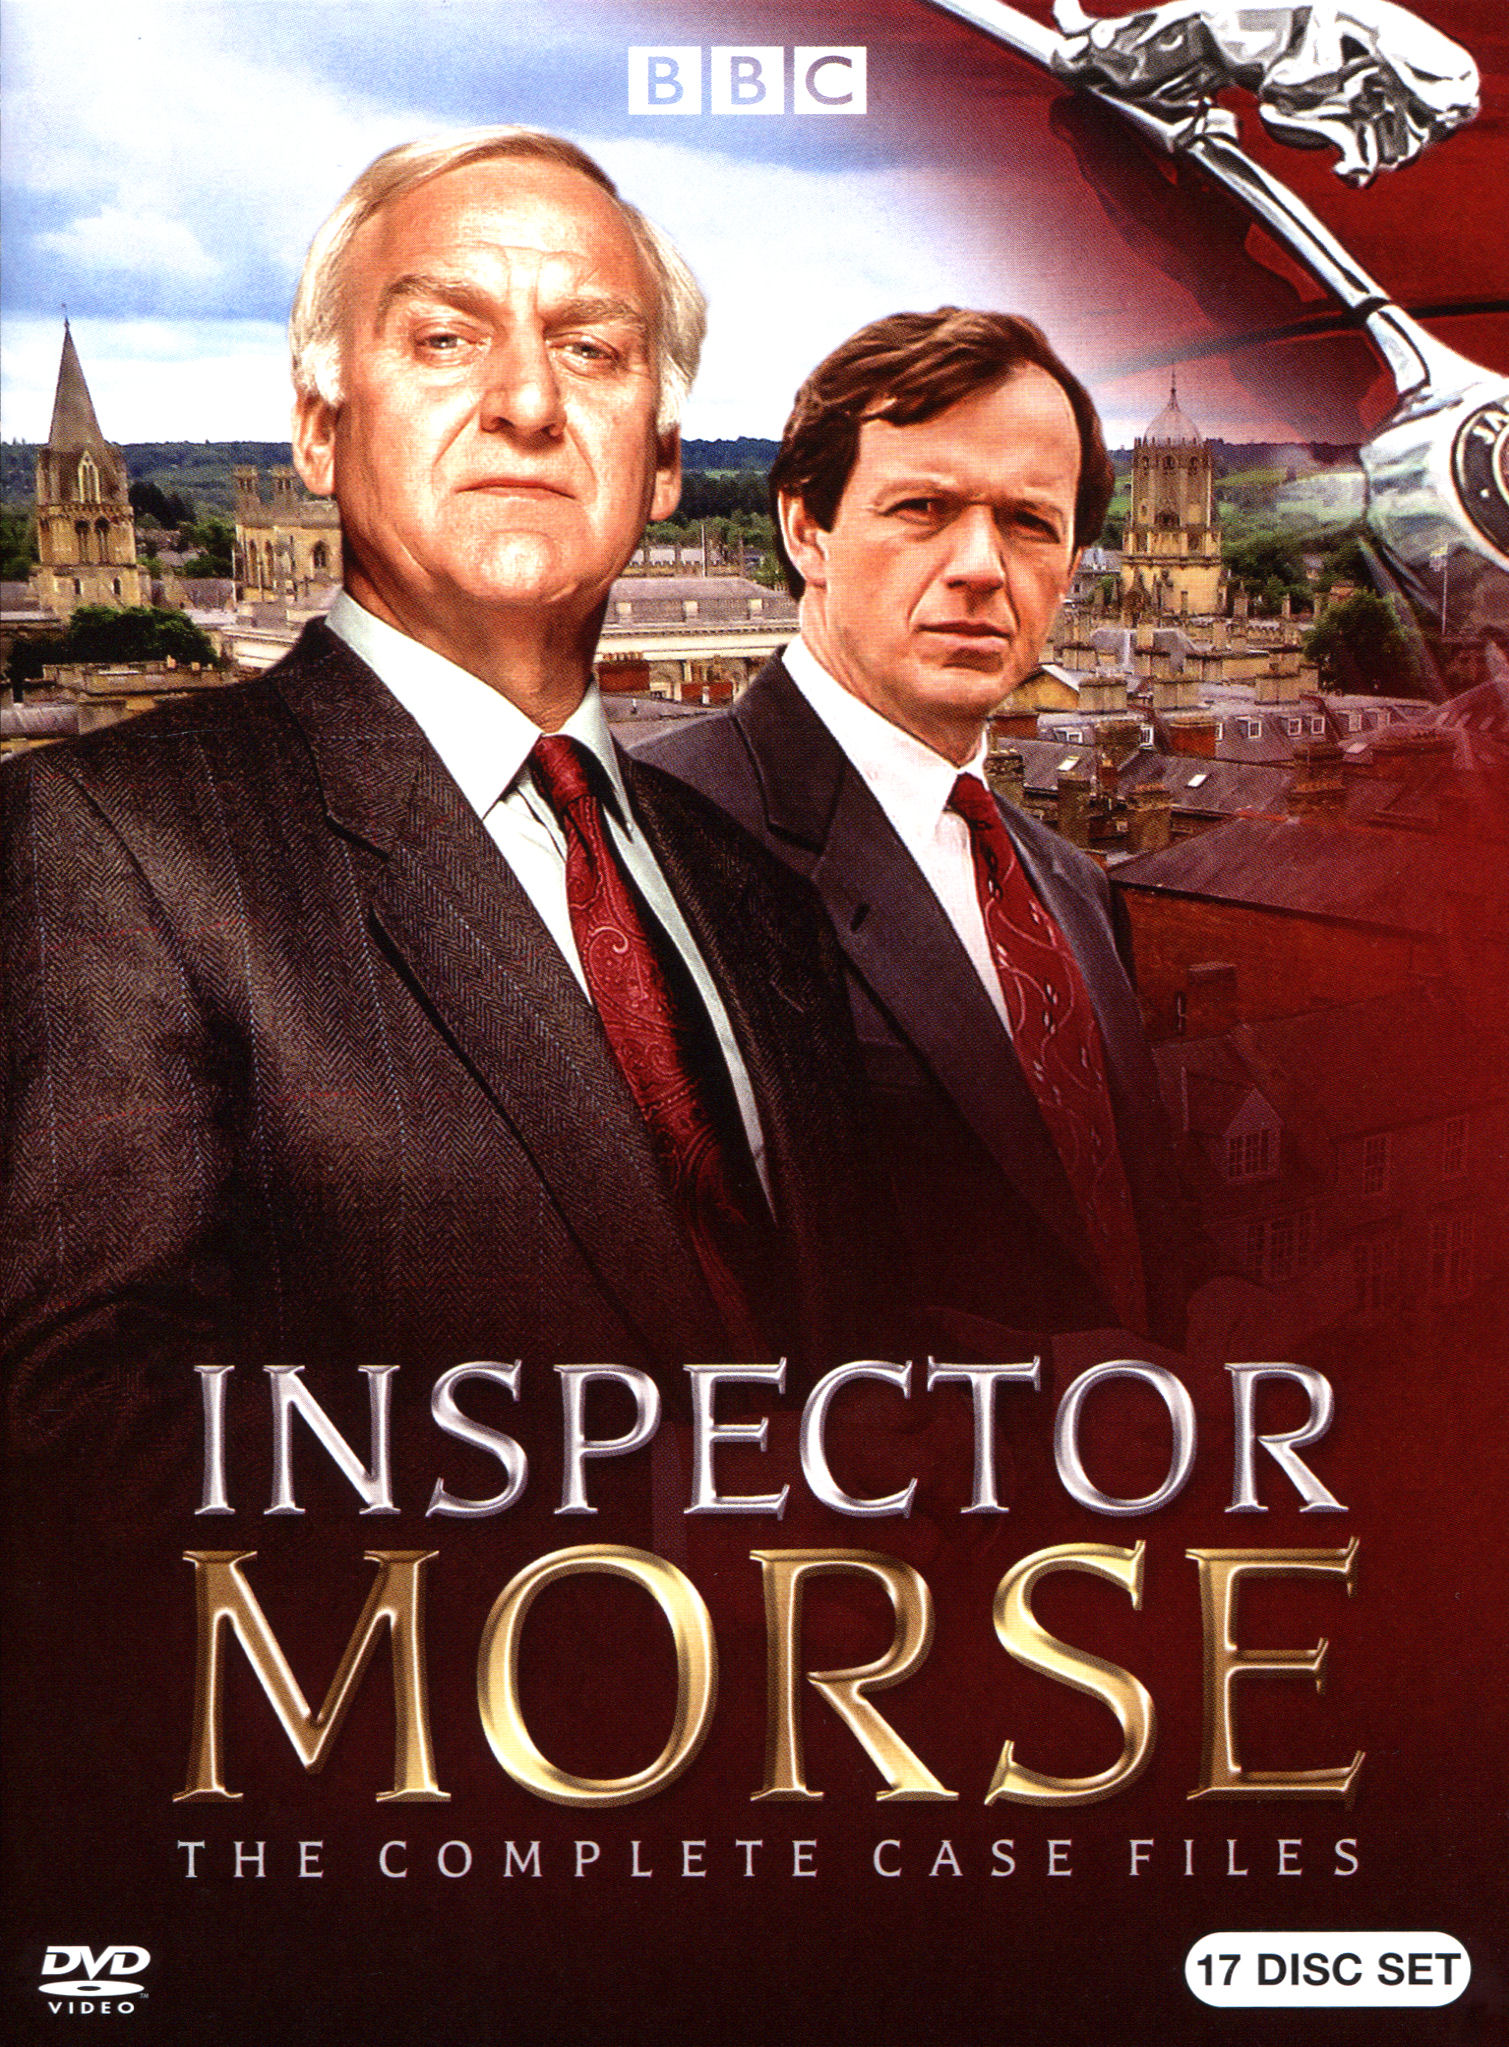 Inspector Morse DvD 11